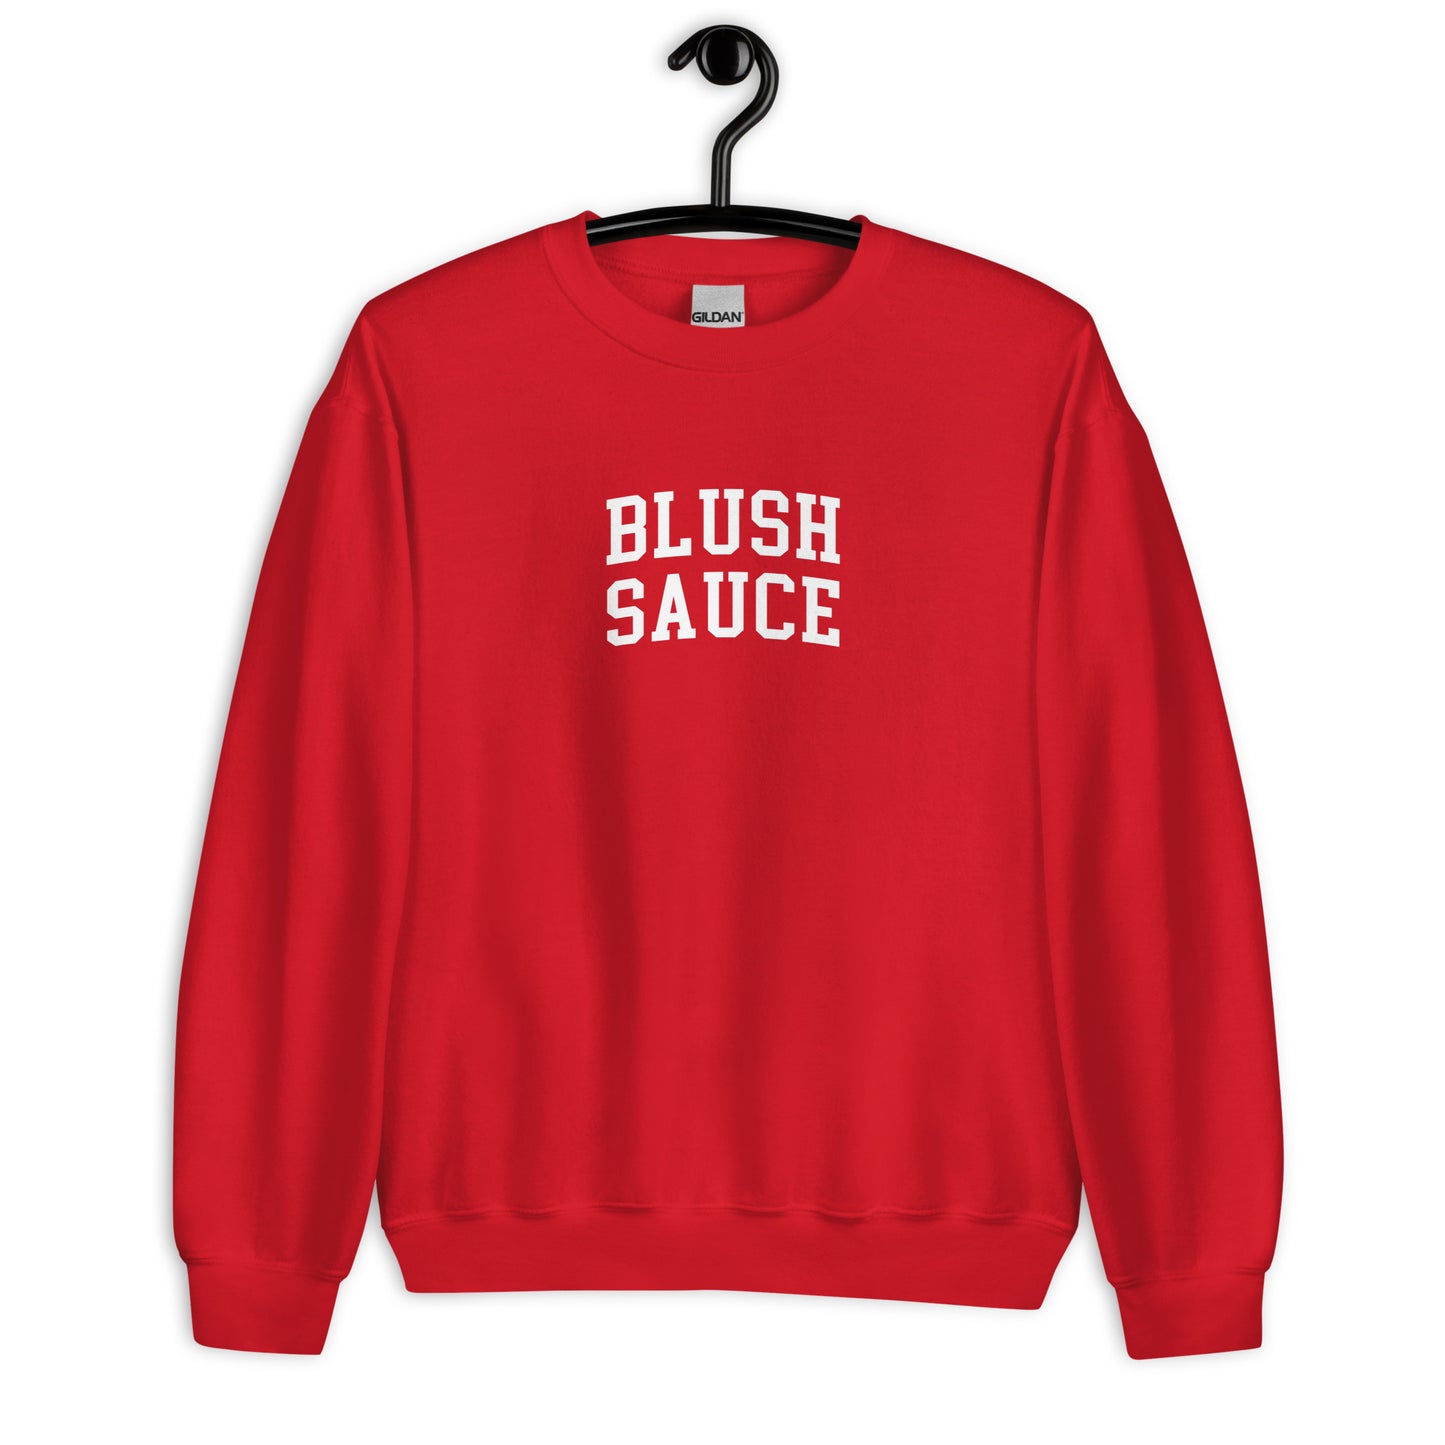 Blush Sauce Sweatshirt - Arched Font